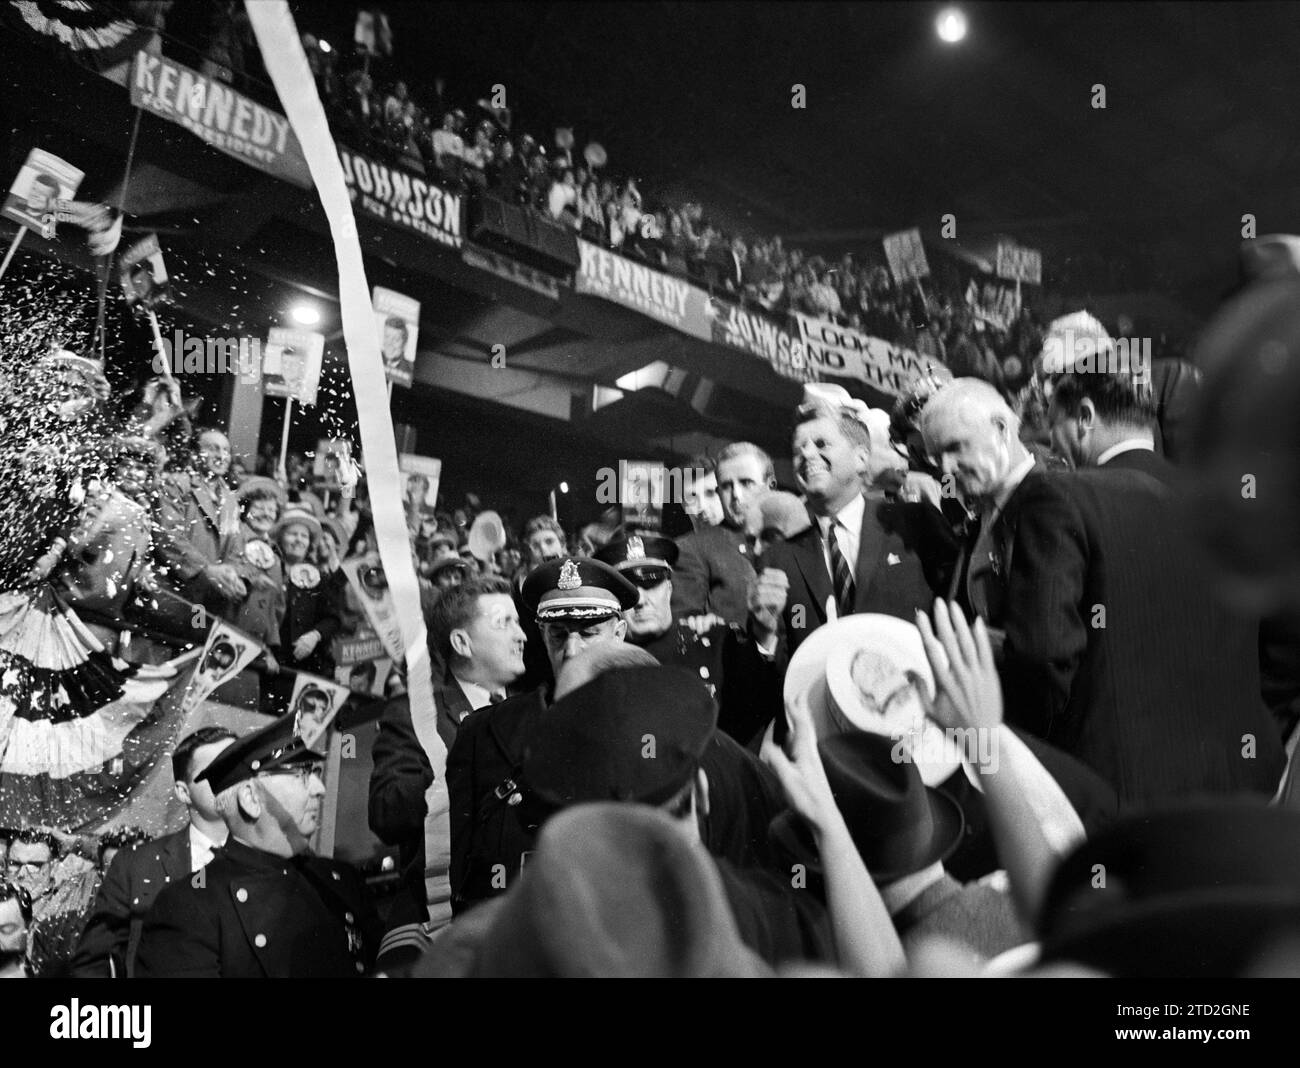 U.S. Senator John F. Kennedy surrounded by cheering supporters at Boston Garden on night before election day, Boston, Massachusetts, USA, Marion S. Trikosko, U.S. News & World Report Magazine Photograph Collection, November 7, 1960 Stock Photo